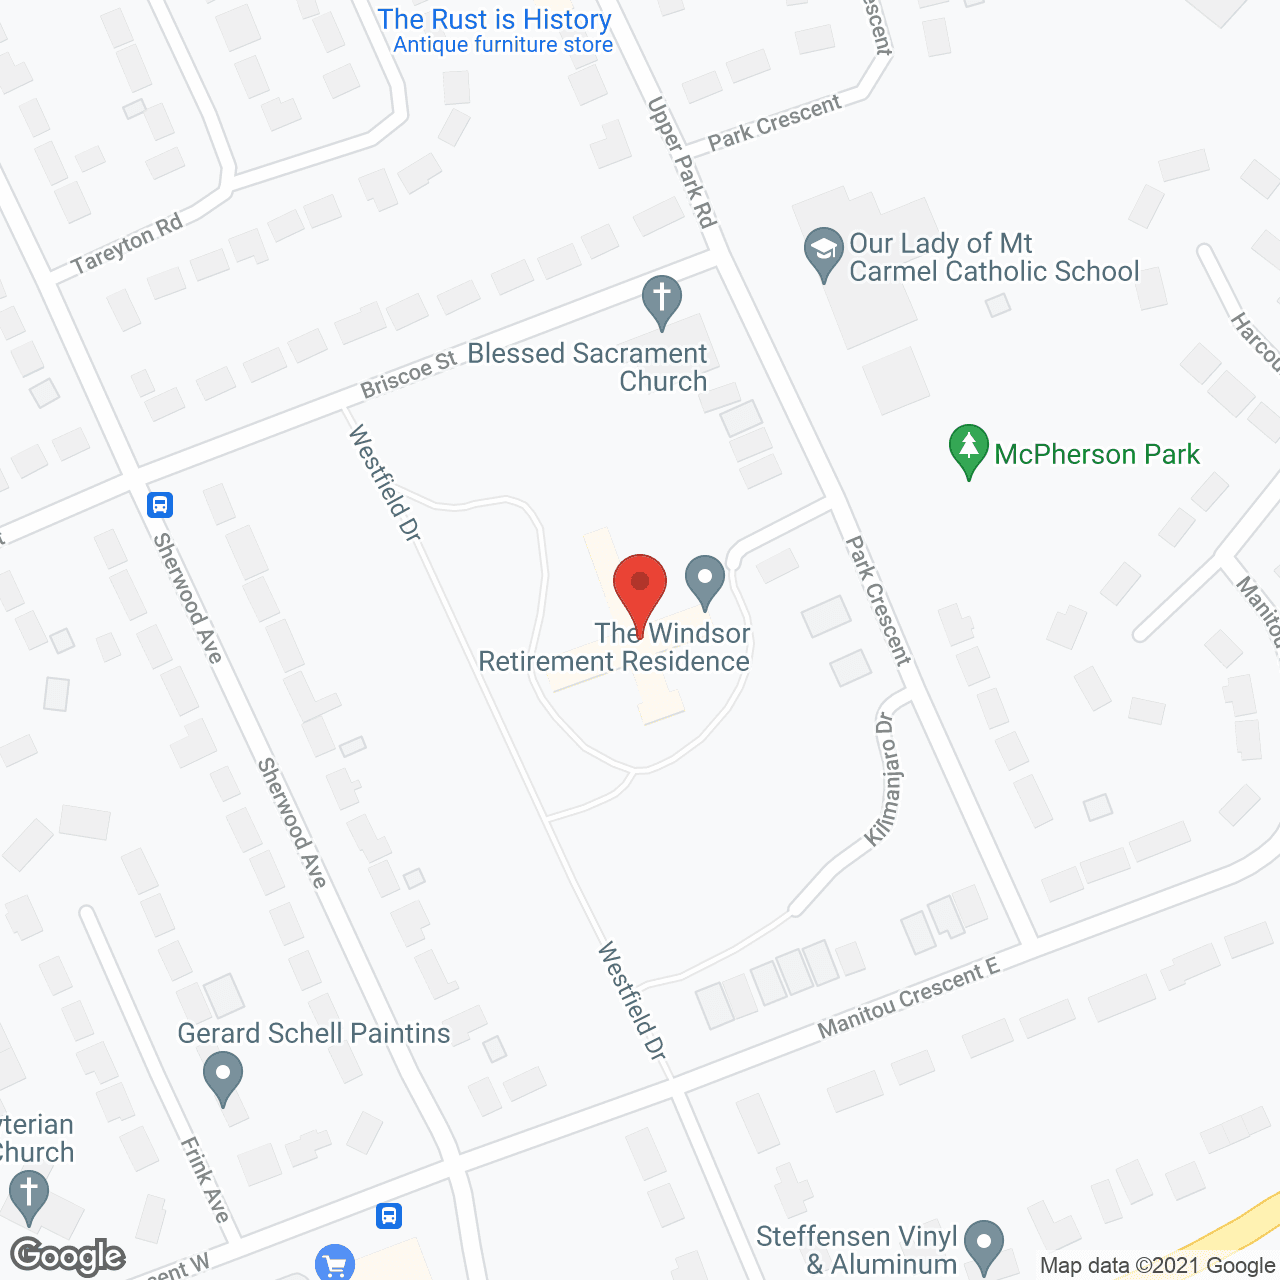 The Windsor Retirement Residence in google map